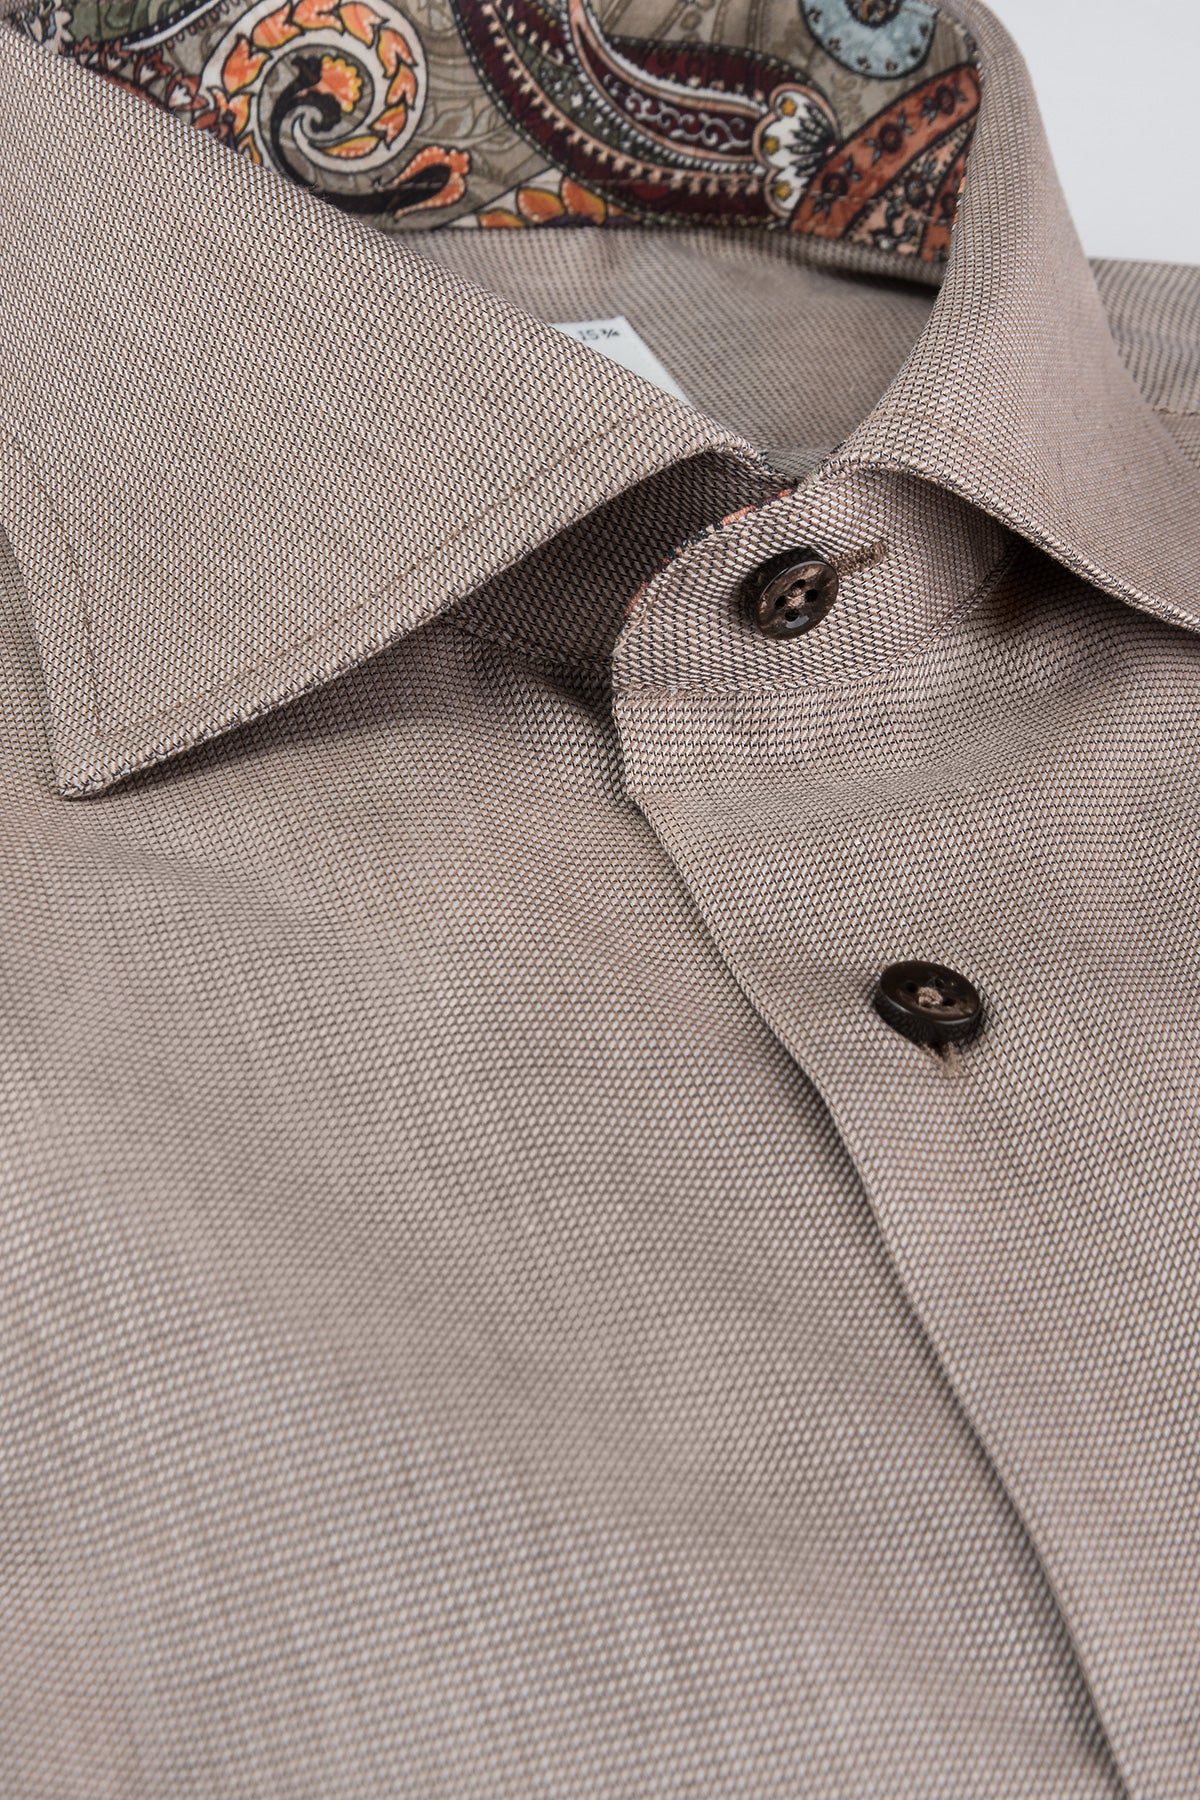 Beige regular fit shirt with contrast details